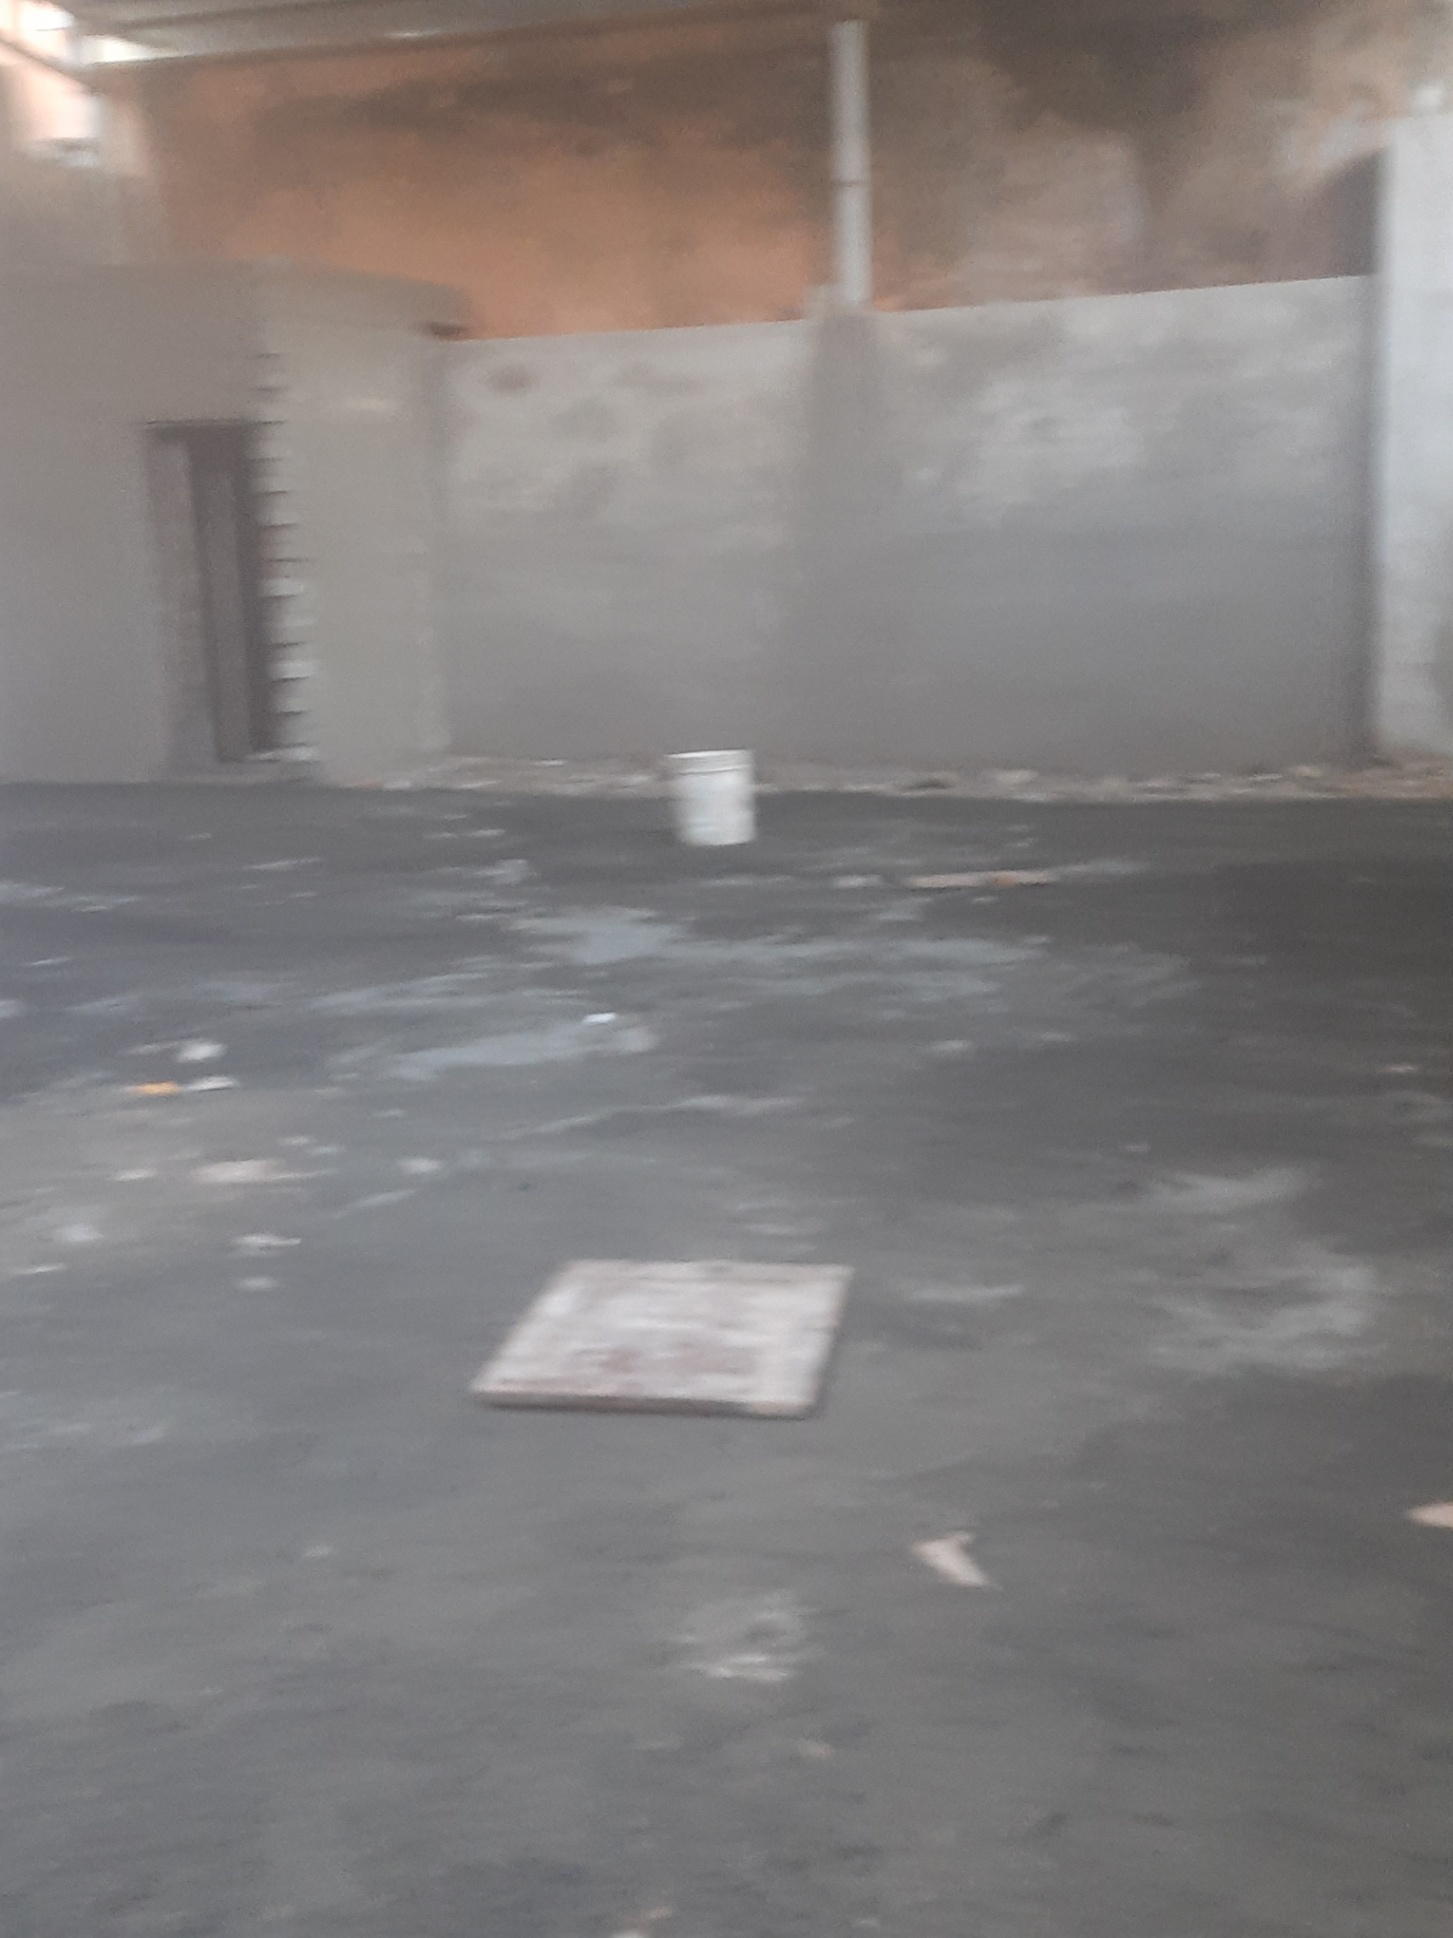 Rent Office/ Shop, 02000 sq ft carpet area, UnFurnished for rent